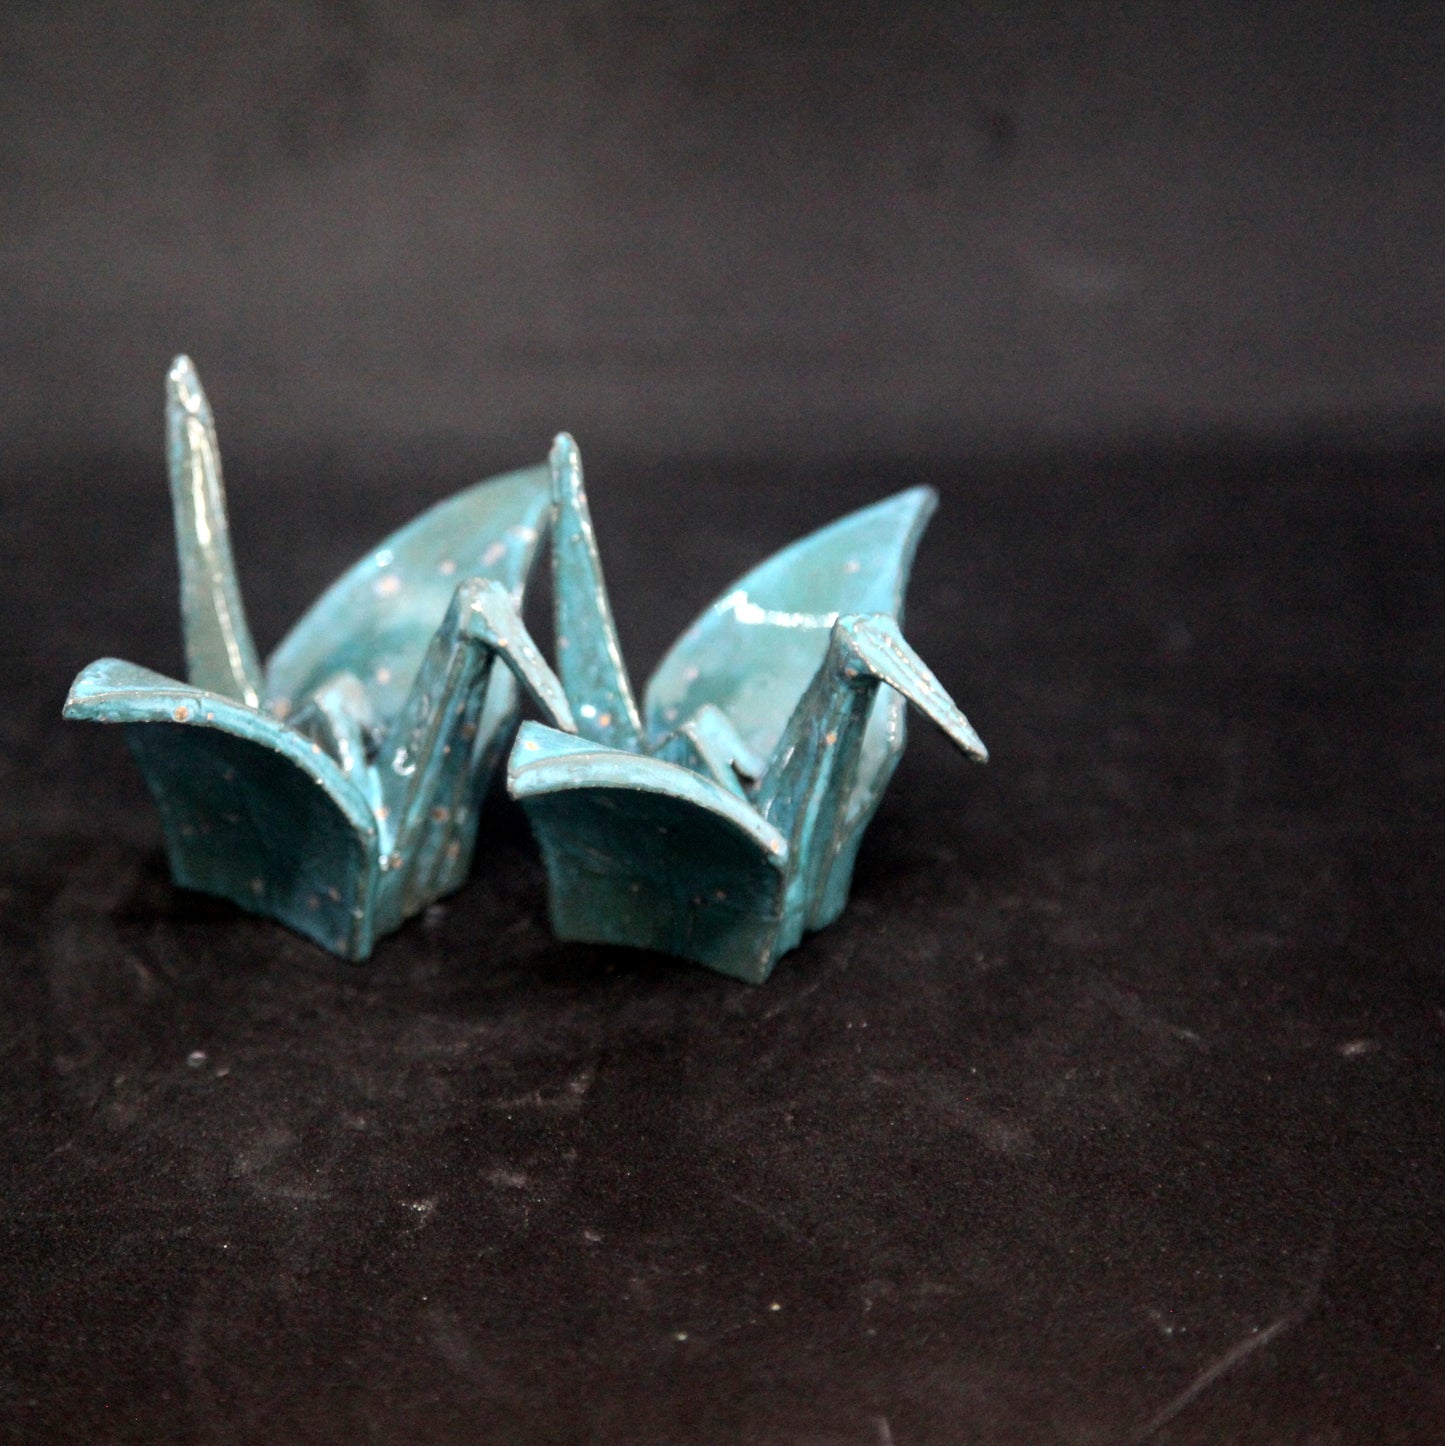 Oiseaux tuquoise cristallisant - motif origami